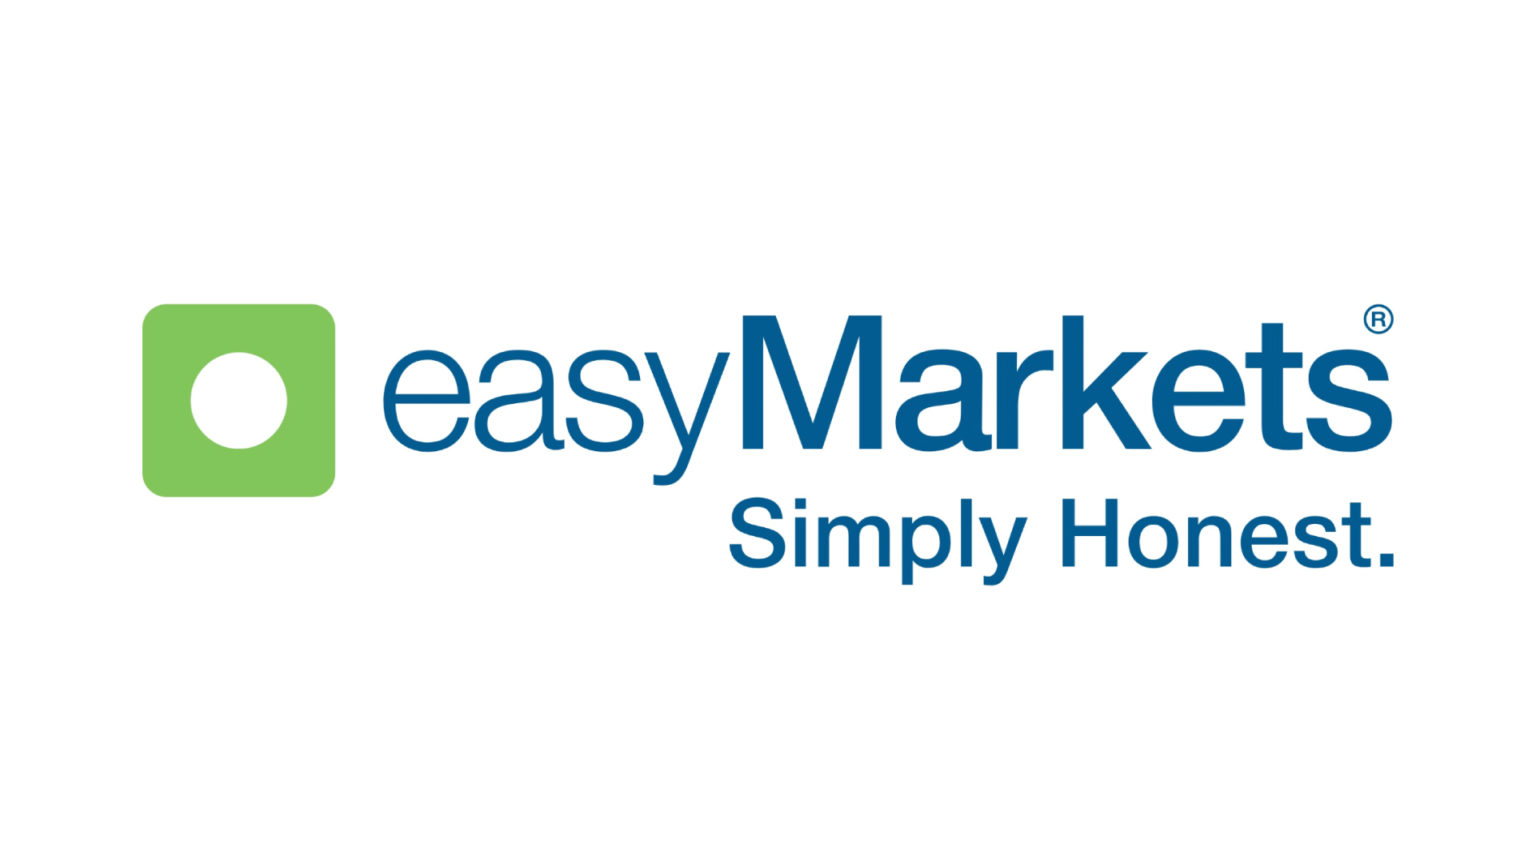 easyMarkets Review 2021 - Trade Hundreds of Assets at Regulated broker